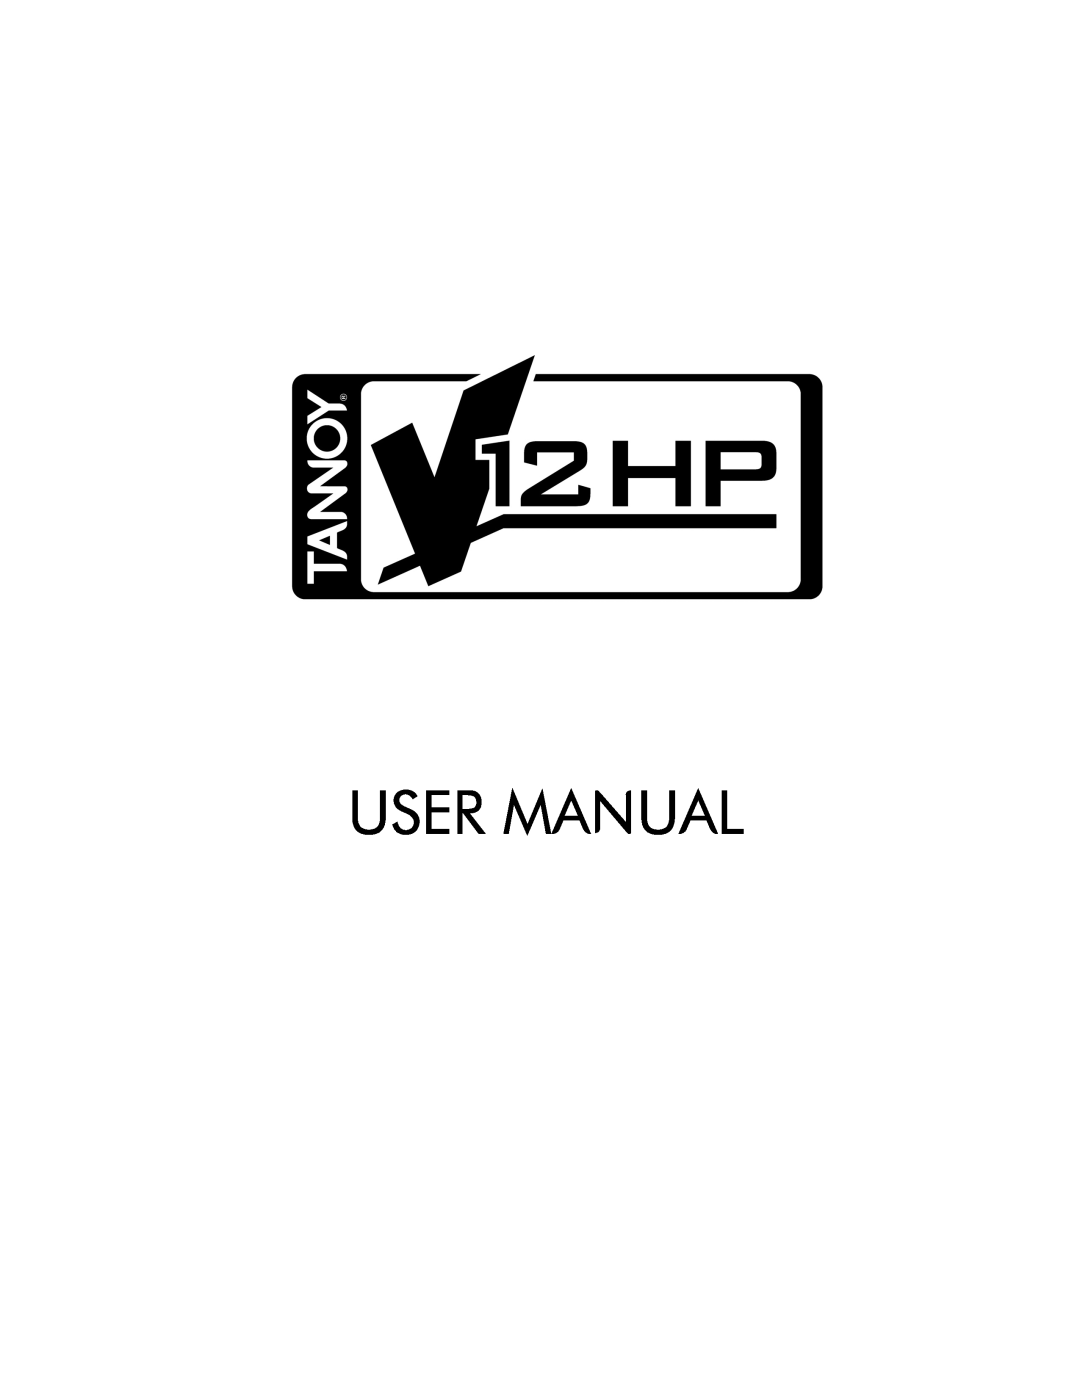 Tannoy V12HP user manual User Manual 